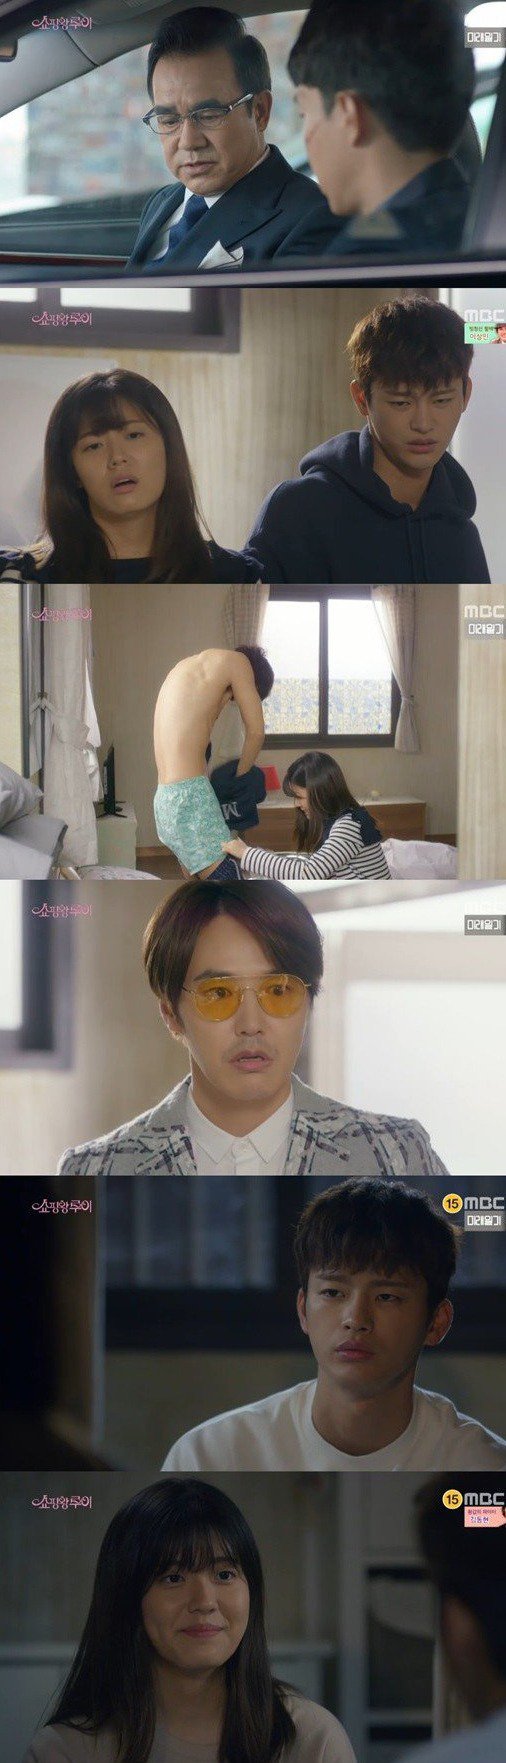 episode 5 captures for the Korean drama 'Shopping King Louis'